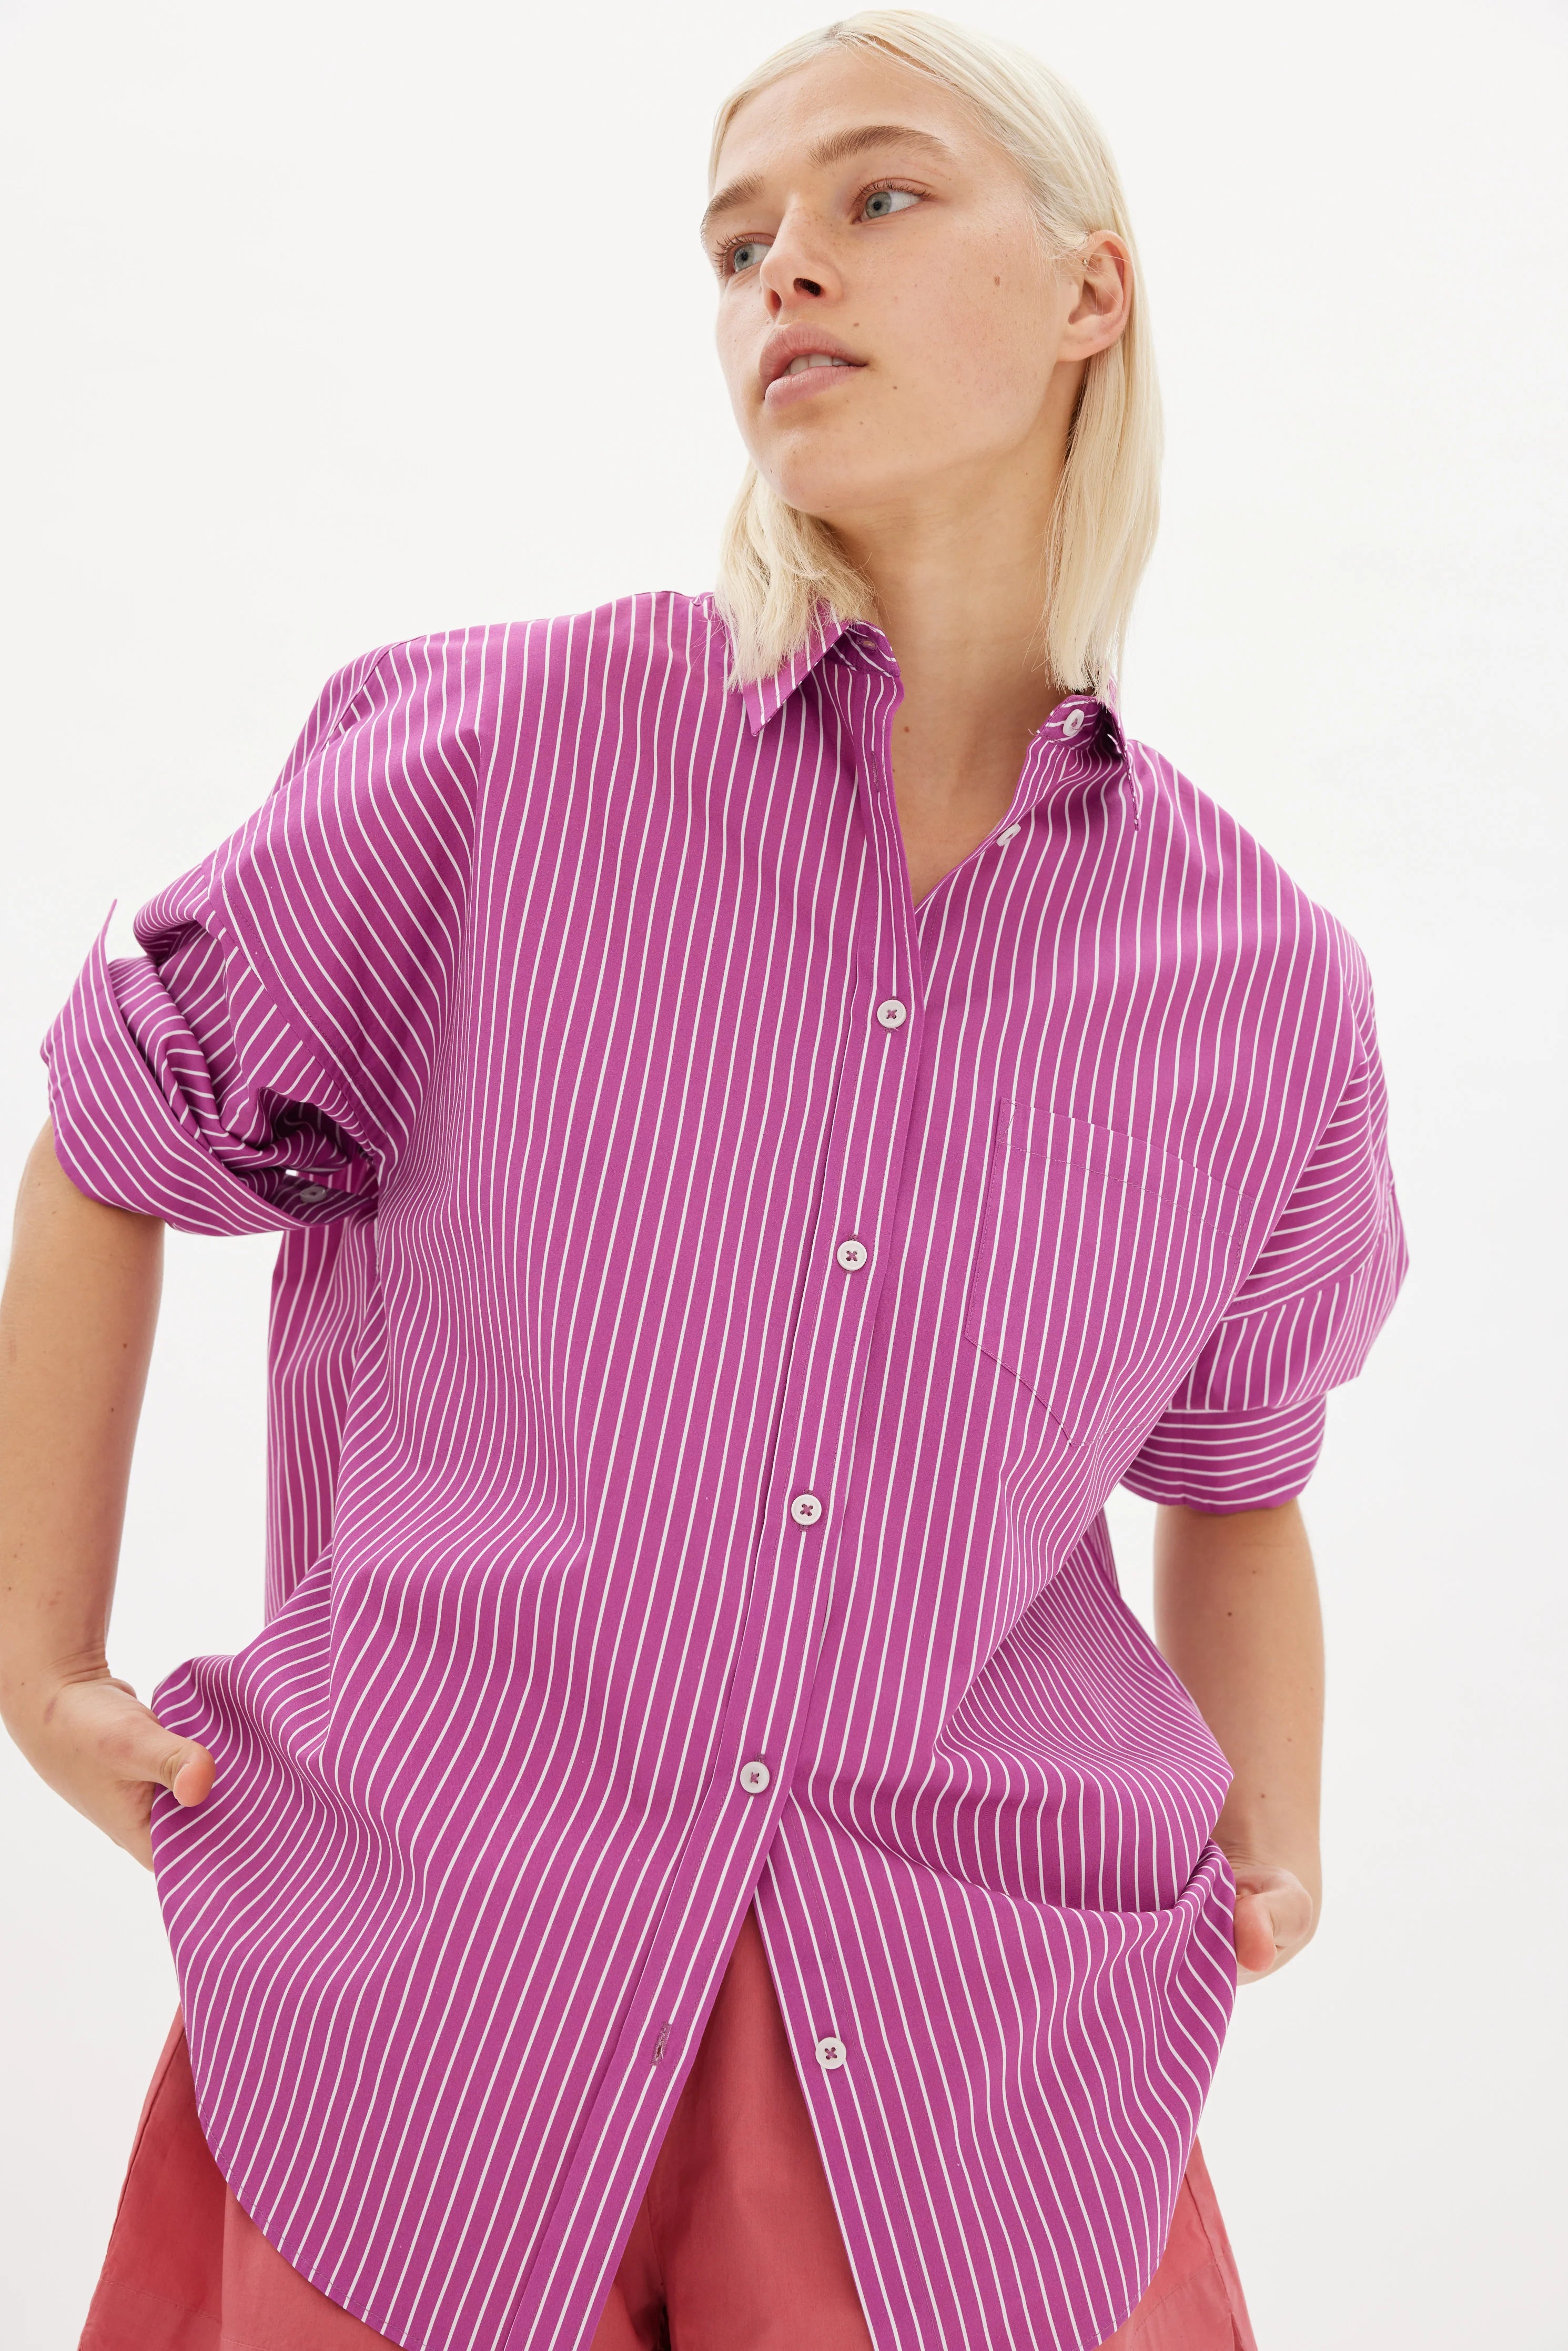 LMND Chiara Mid Length Stripe Shirt in Fuschia & White Momera Goondiwindi 